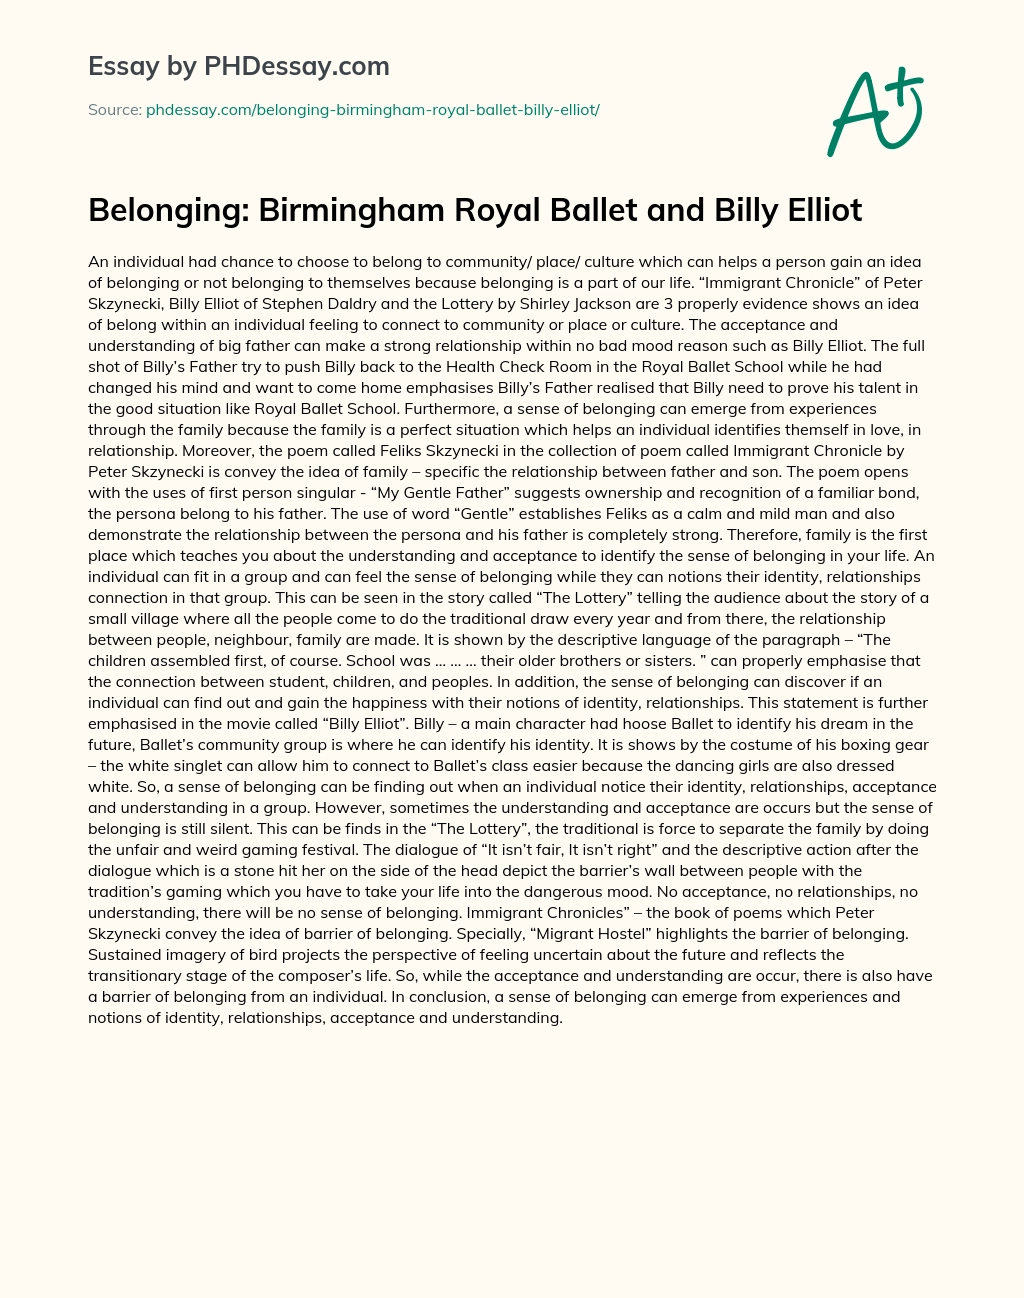 Belonging: Birmingham Royal Ballet and Billy Elliot essay